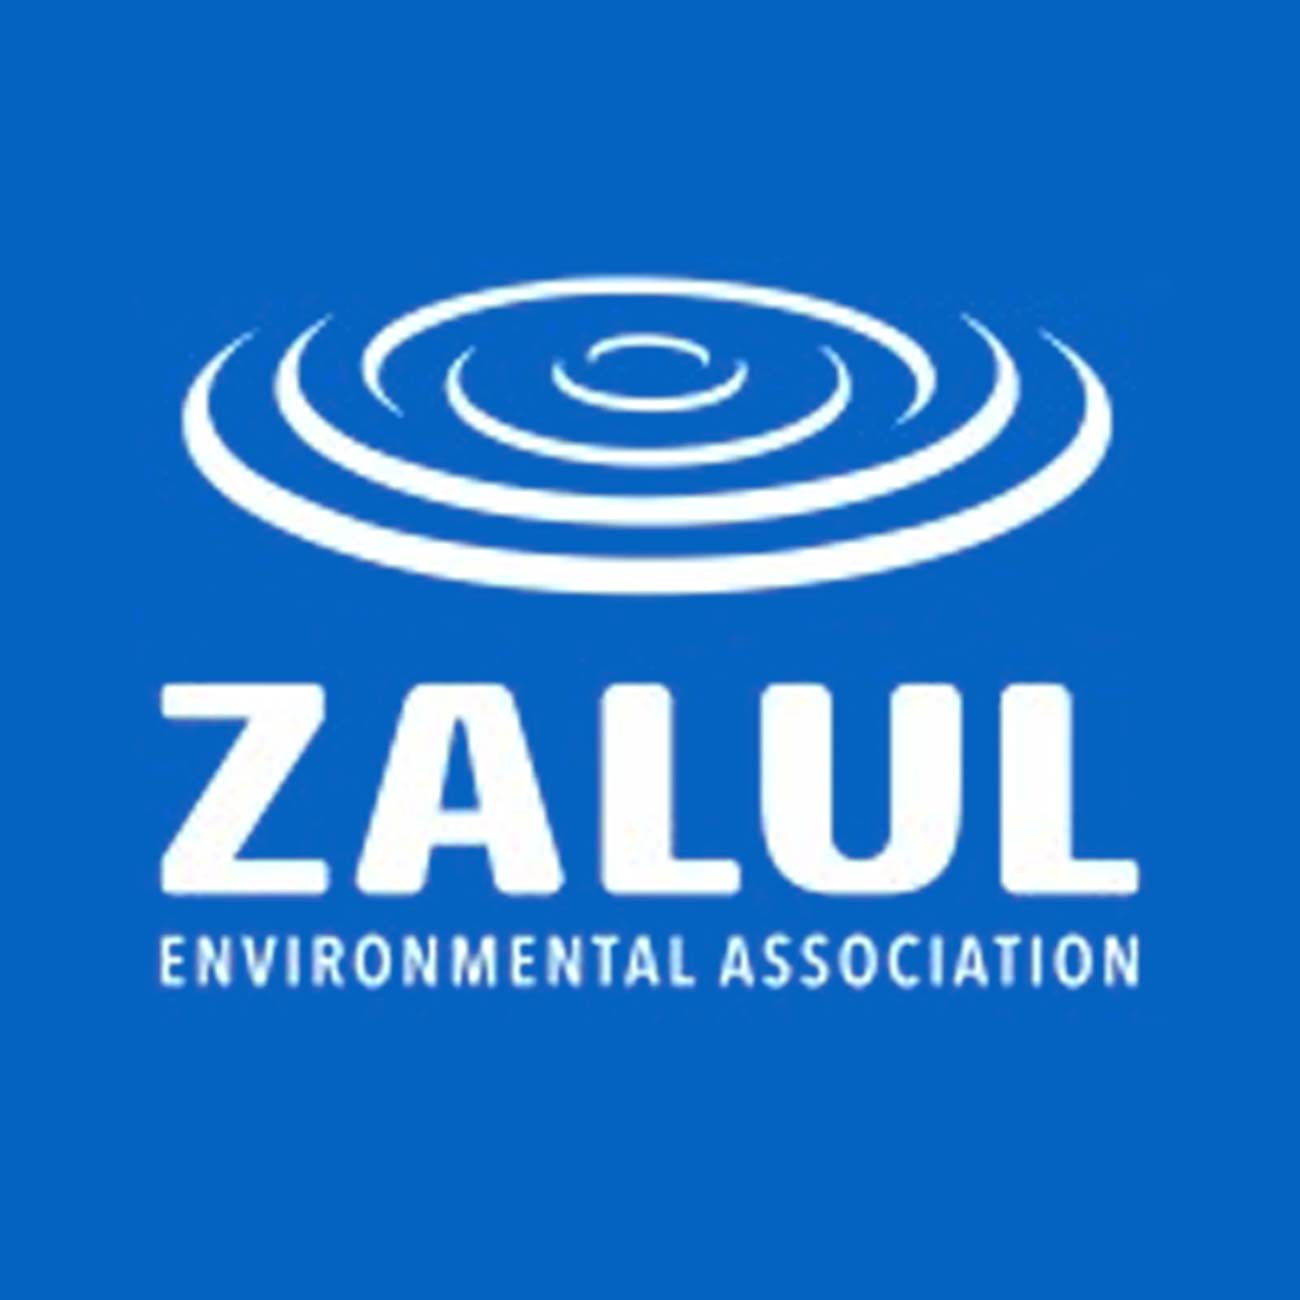 Zalul Environmental Association logo